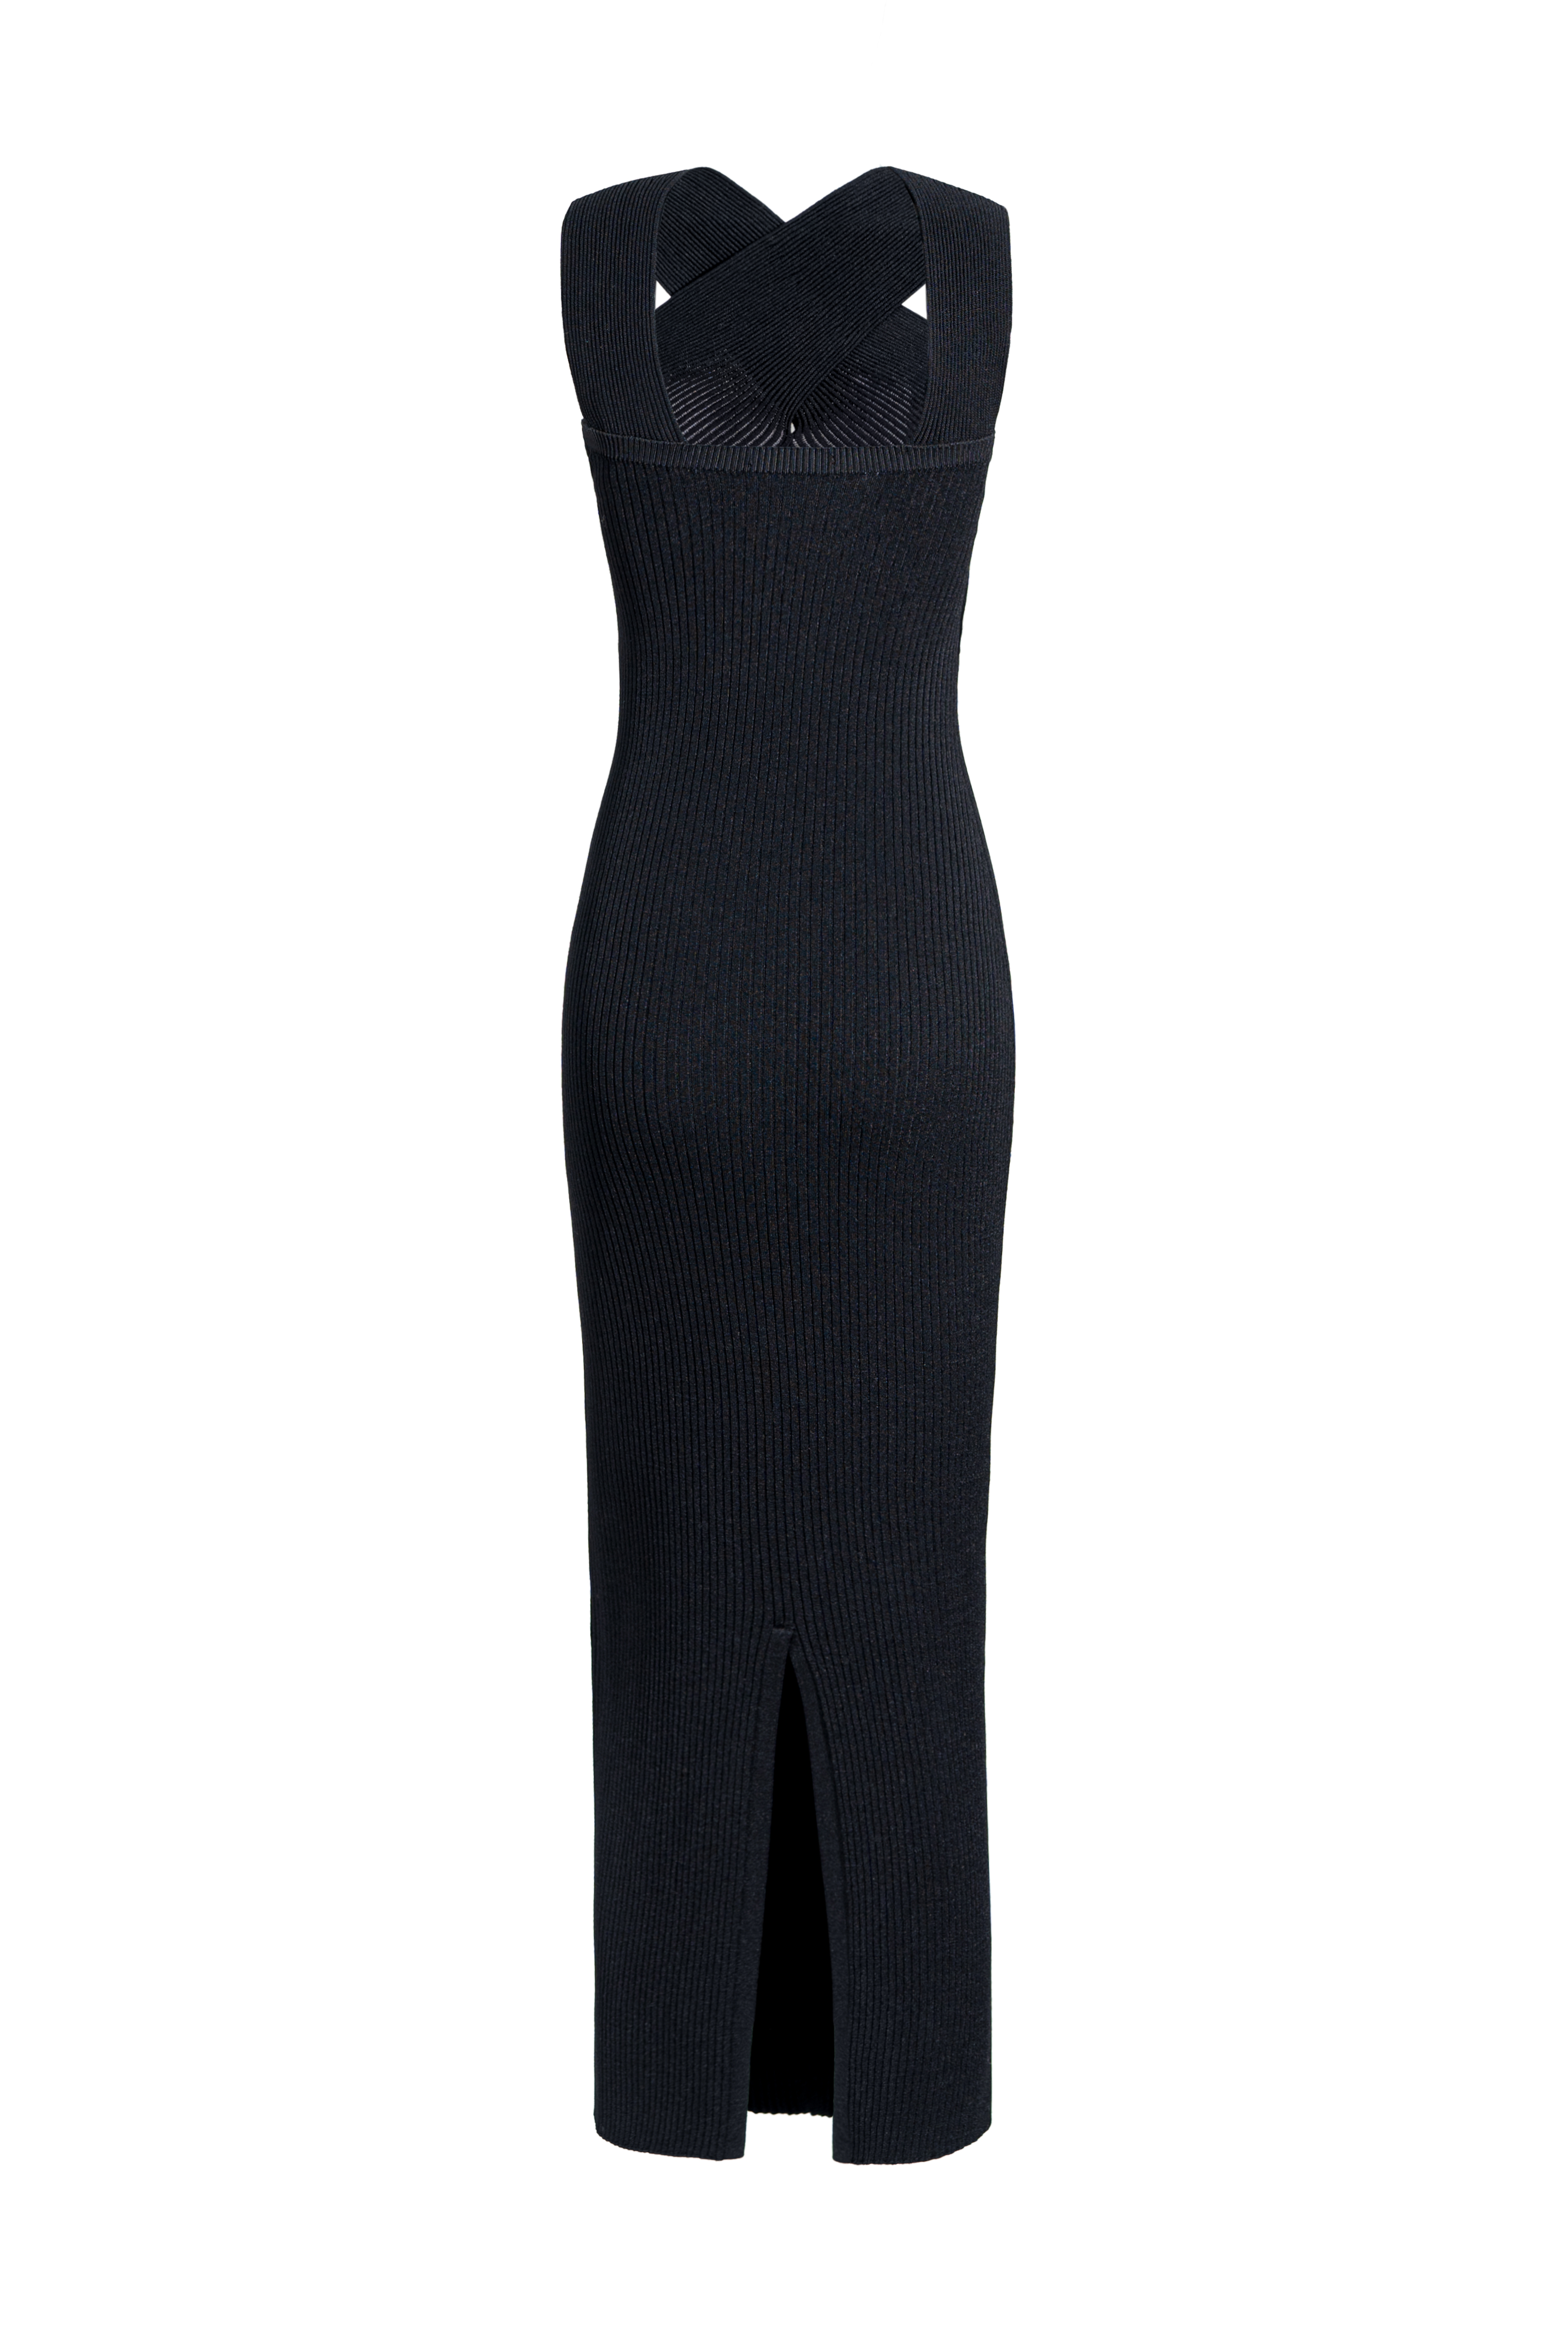 Dress 4935-01 Black from BRUSNiKA